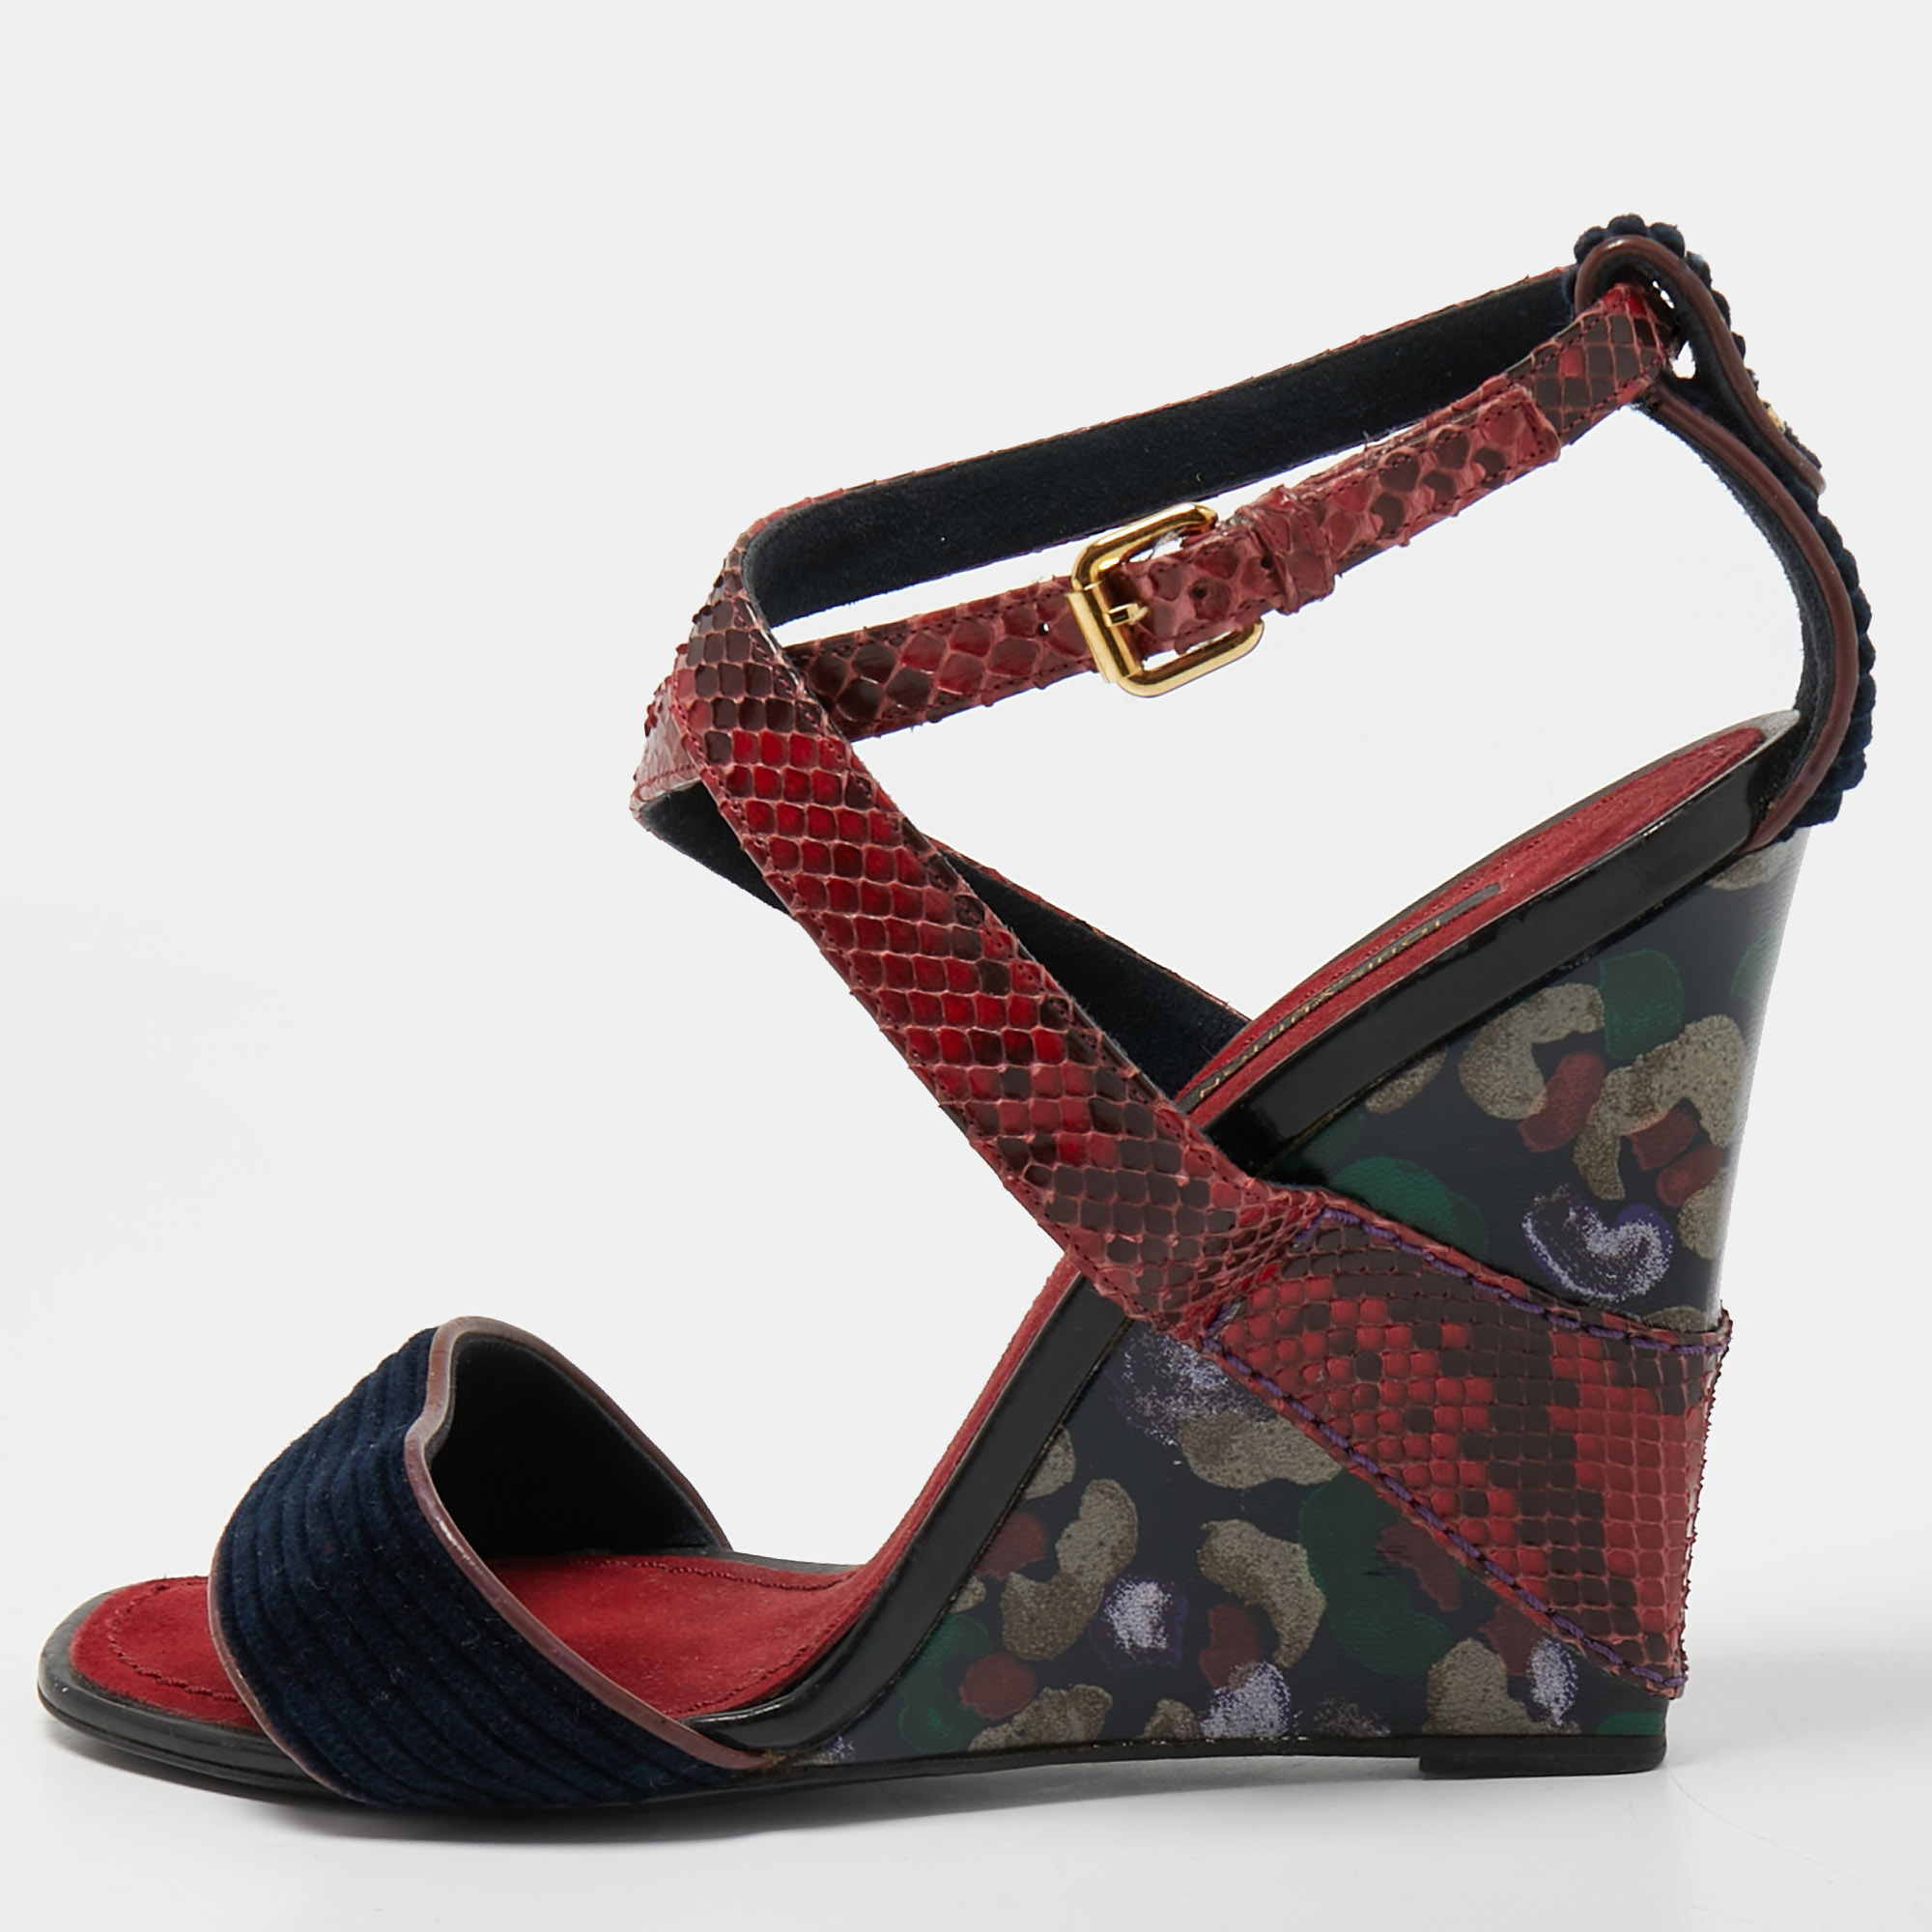 Louis vuitton dark red/navy blue snakeskin and velvet cross ankle strap wedge sandals size 38